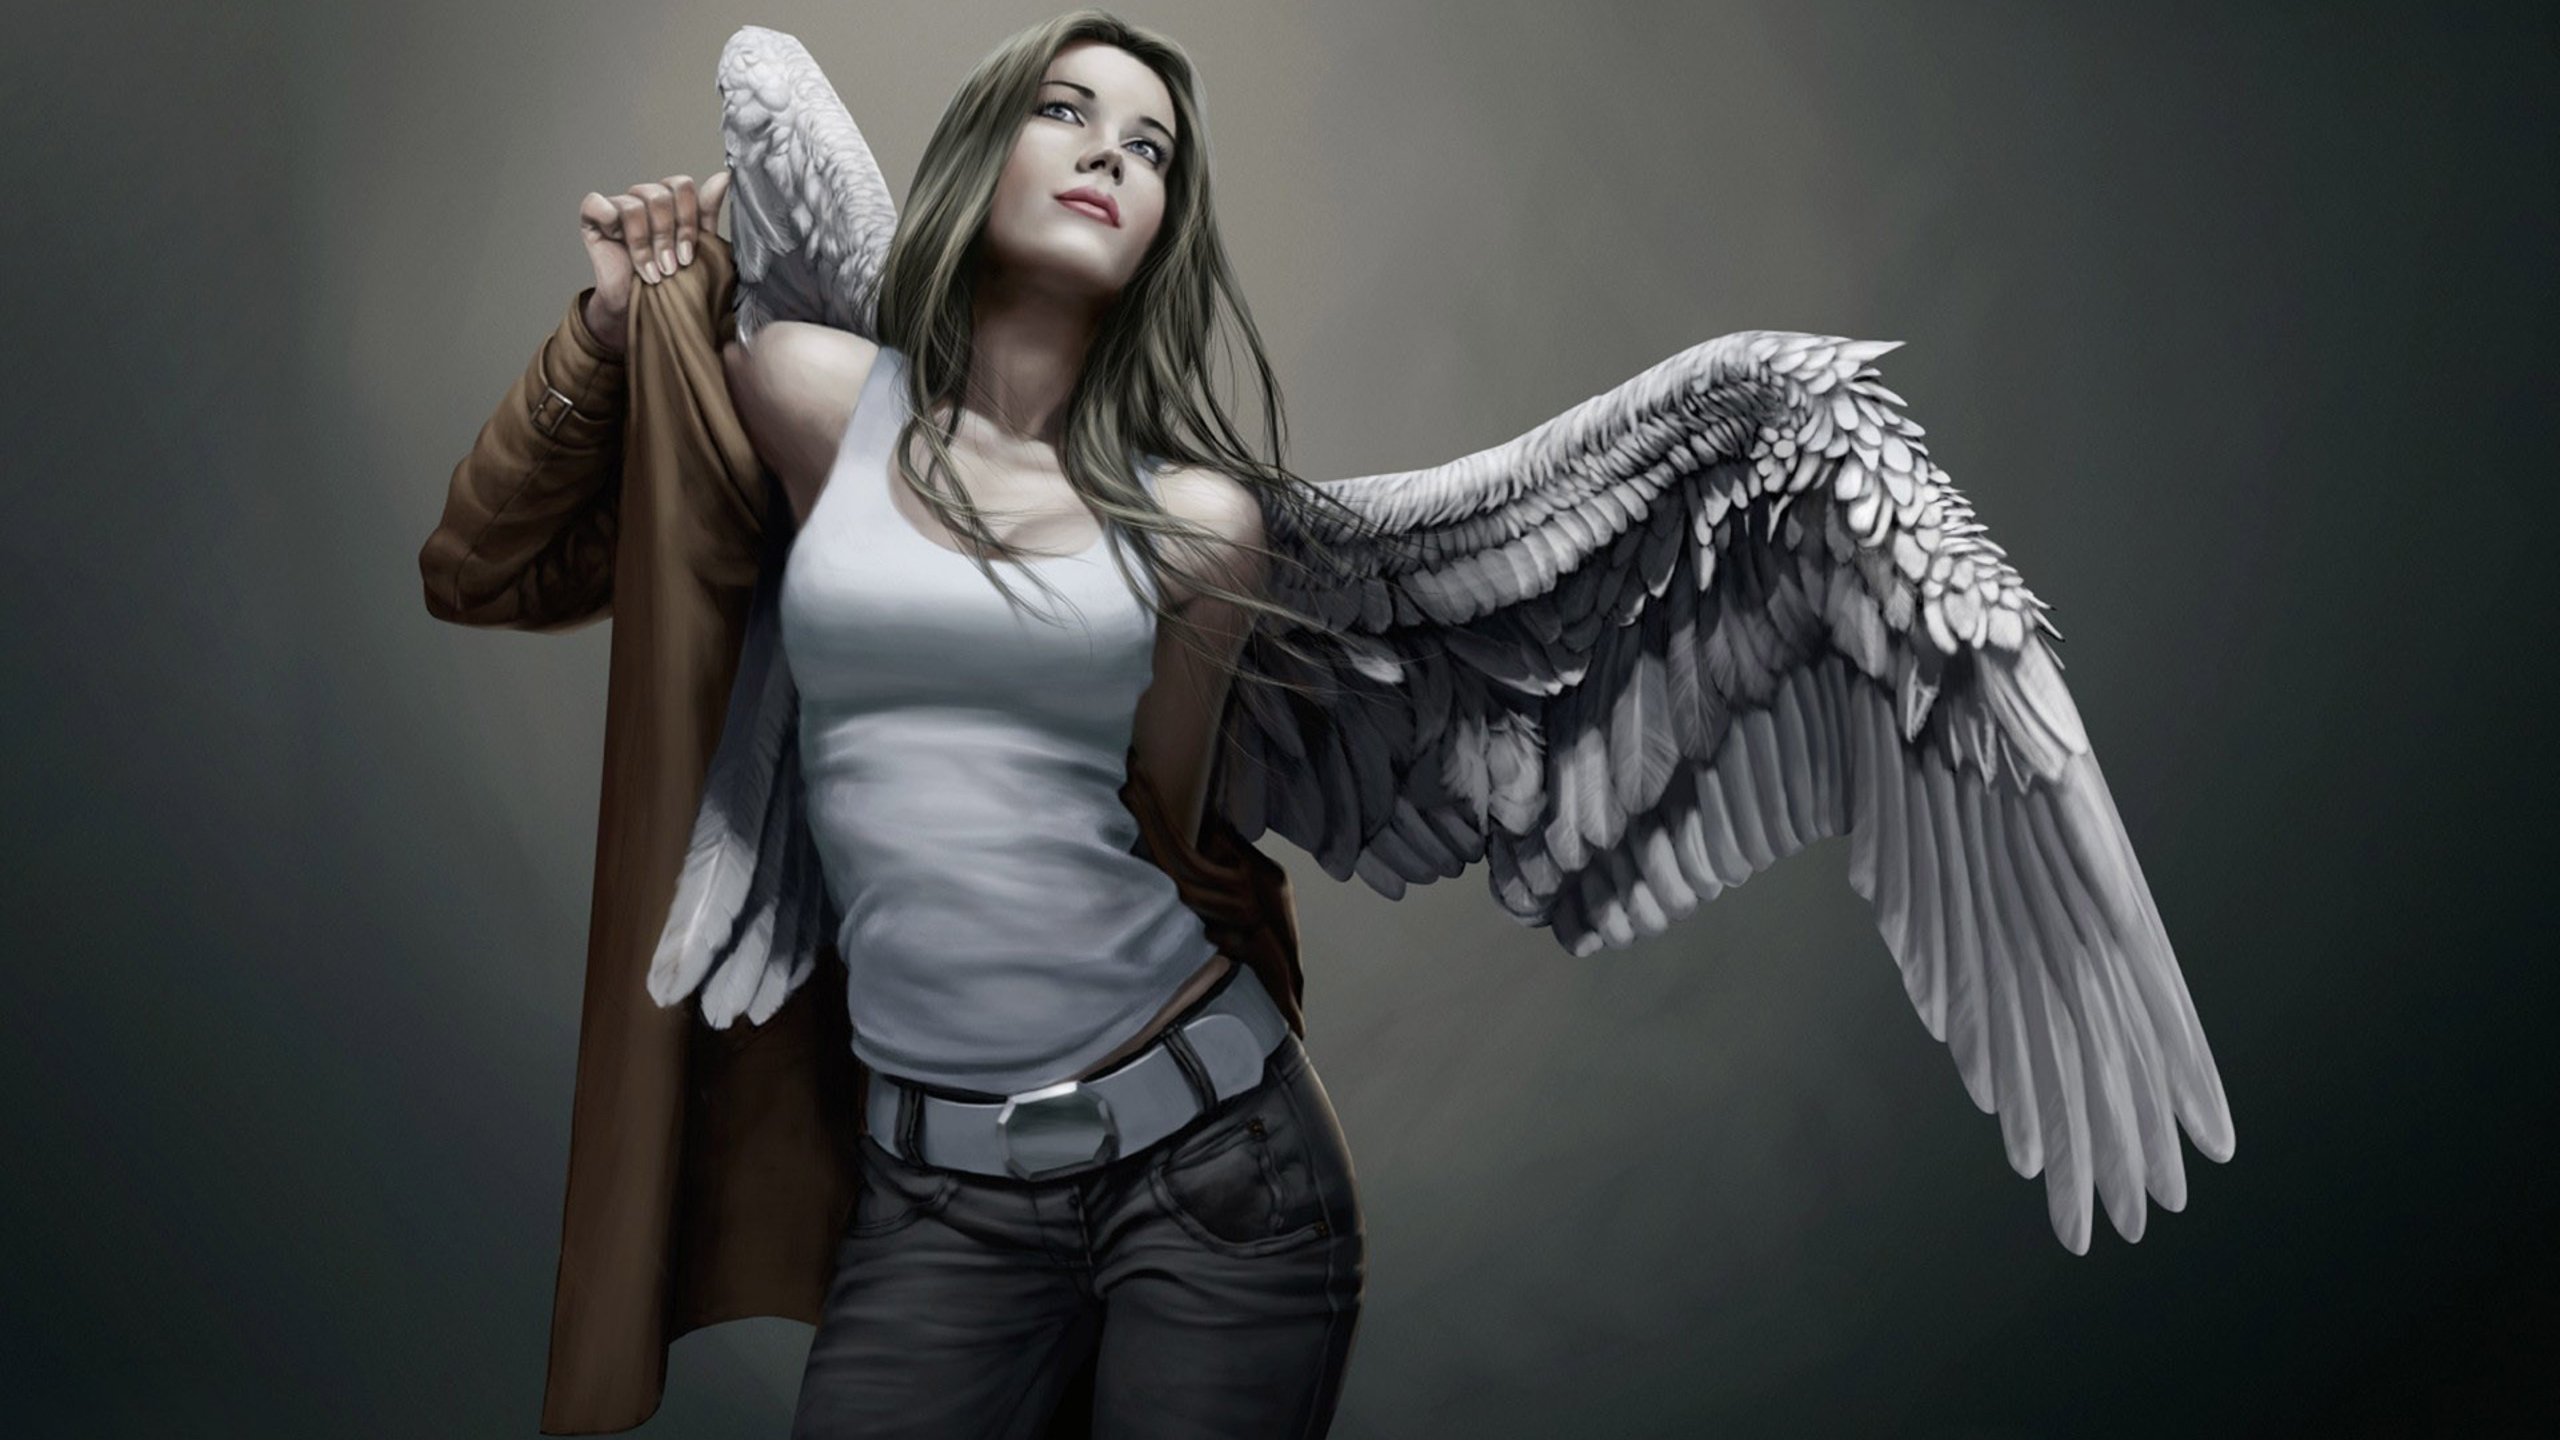 Музыка на телефон ангел. Энн Энджел 1200. Разиэль ангел. Девушка с крыльями. Девушка - ангел.